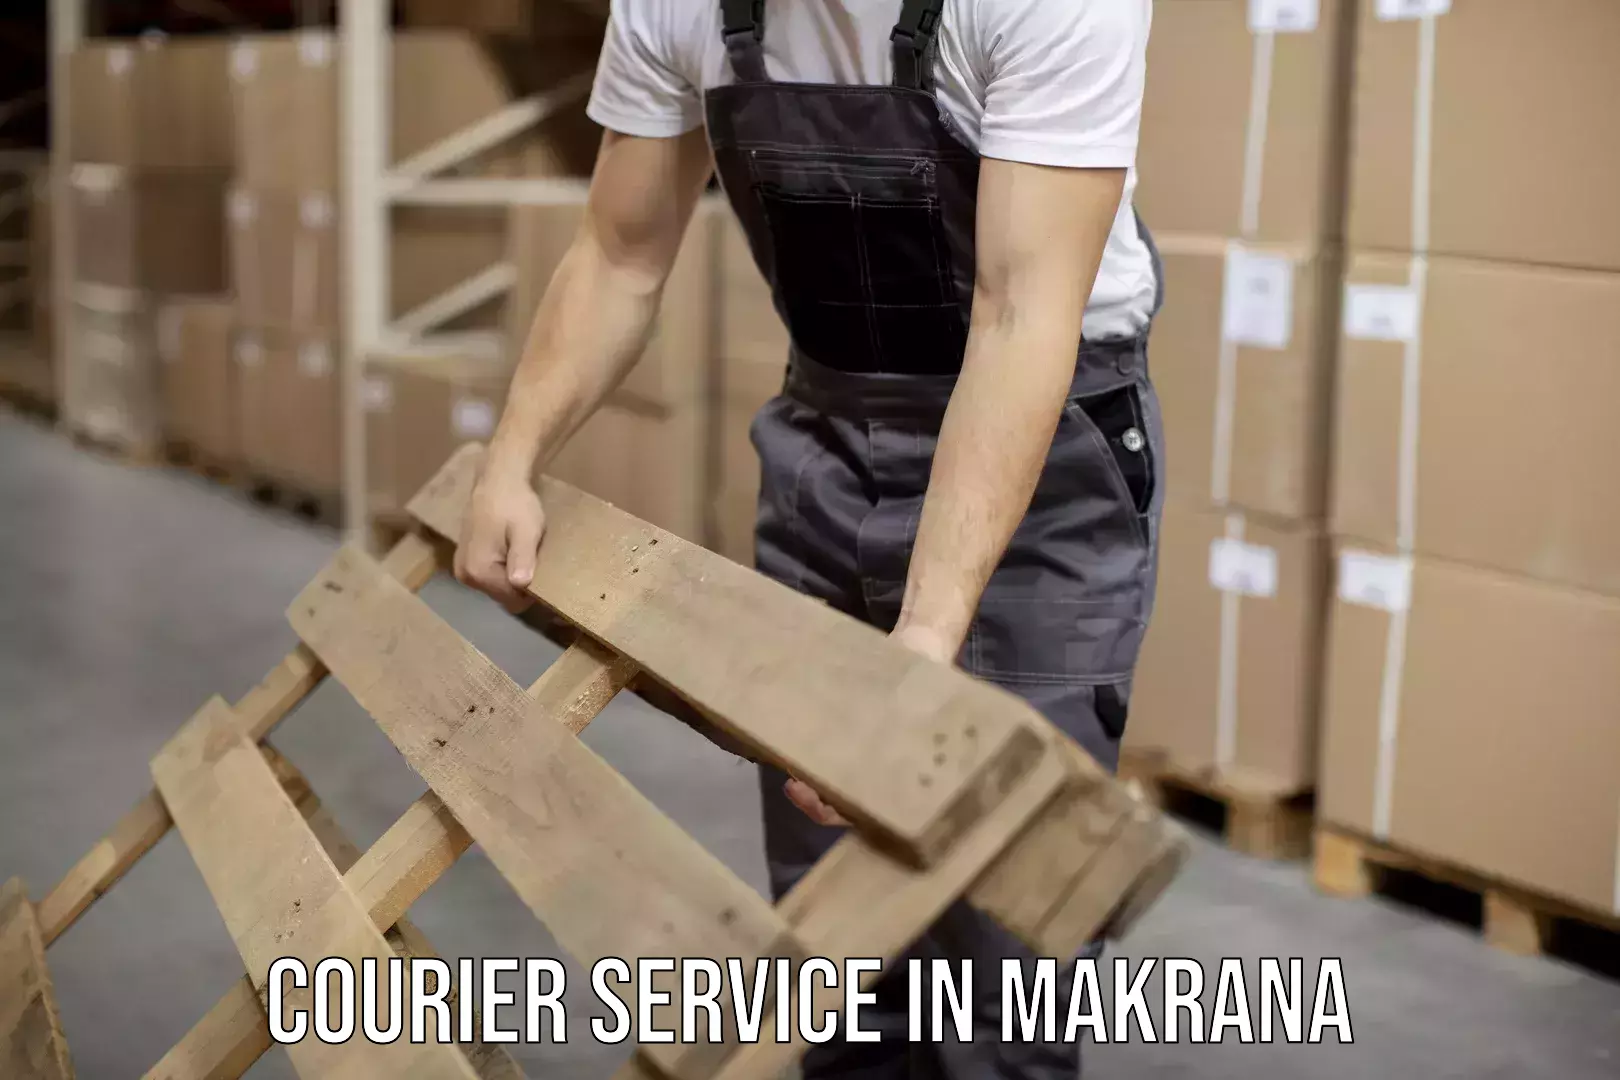 Supply chain efficiency in Makrana